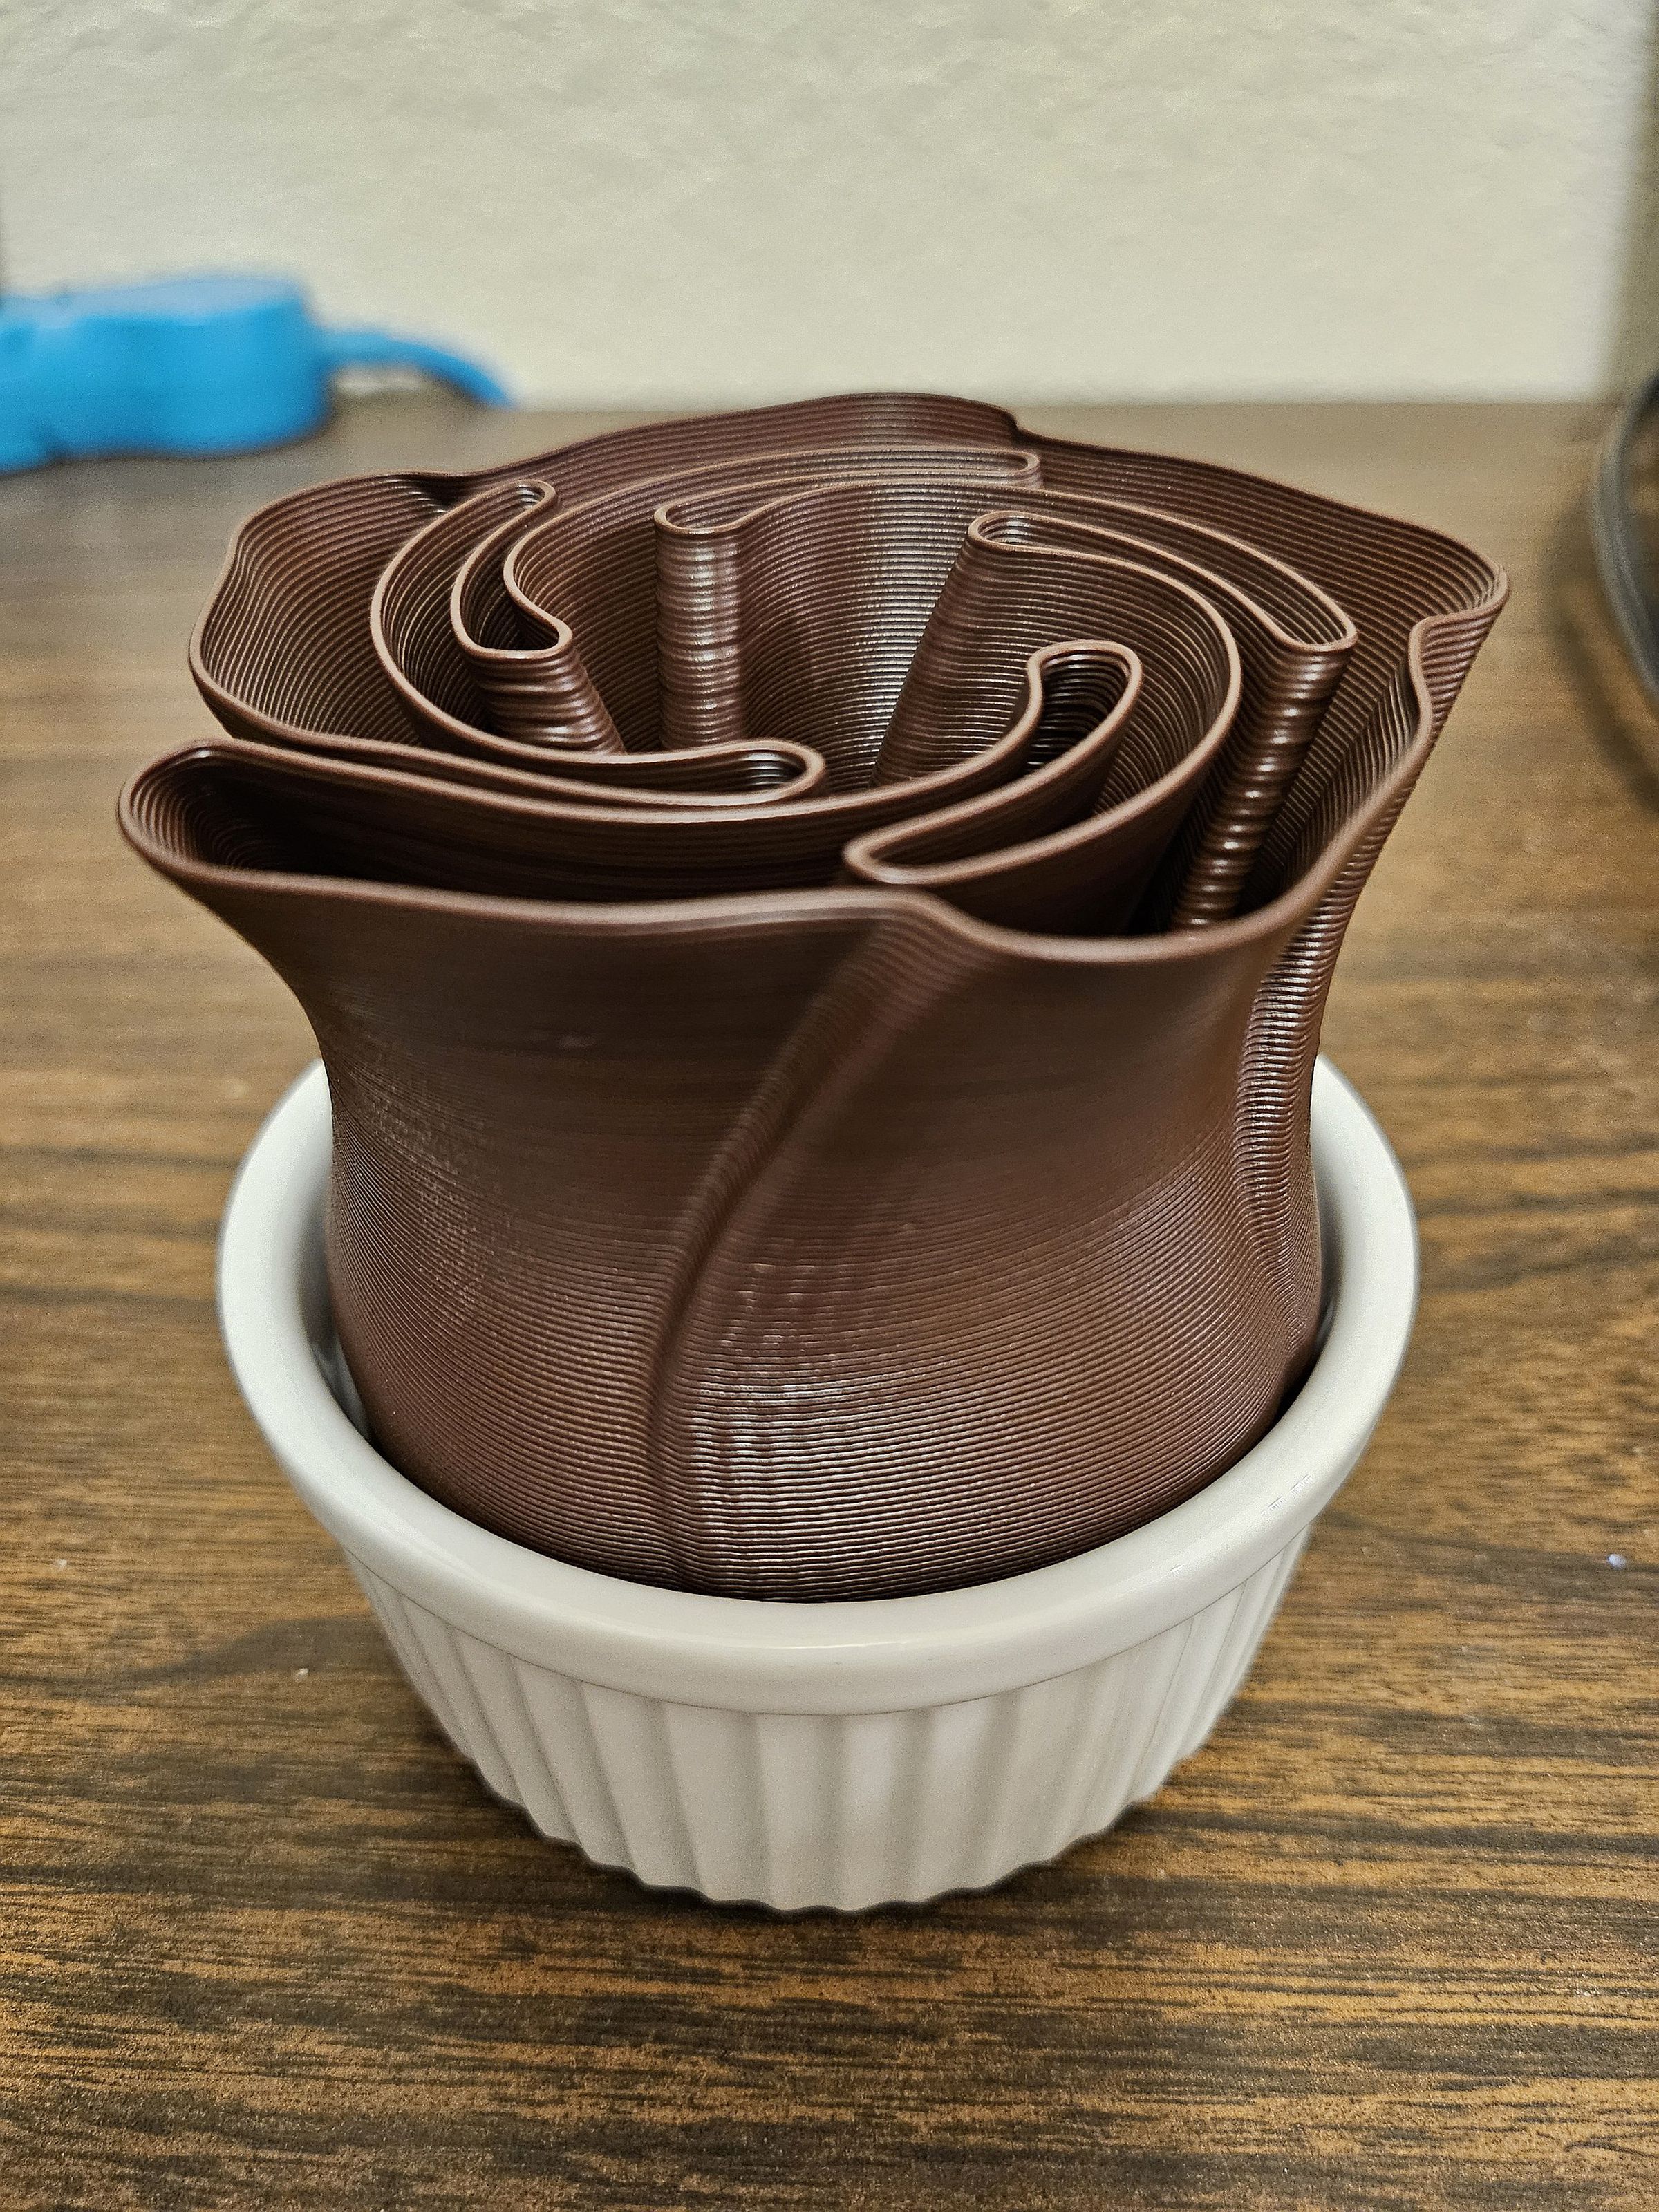 The chocolate rose sits in a porcelain ramekin.